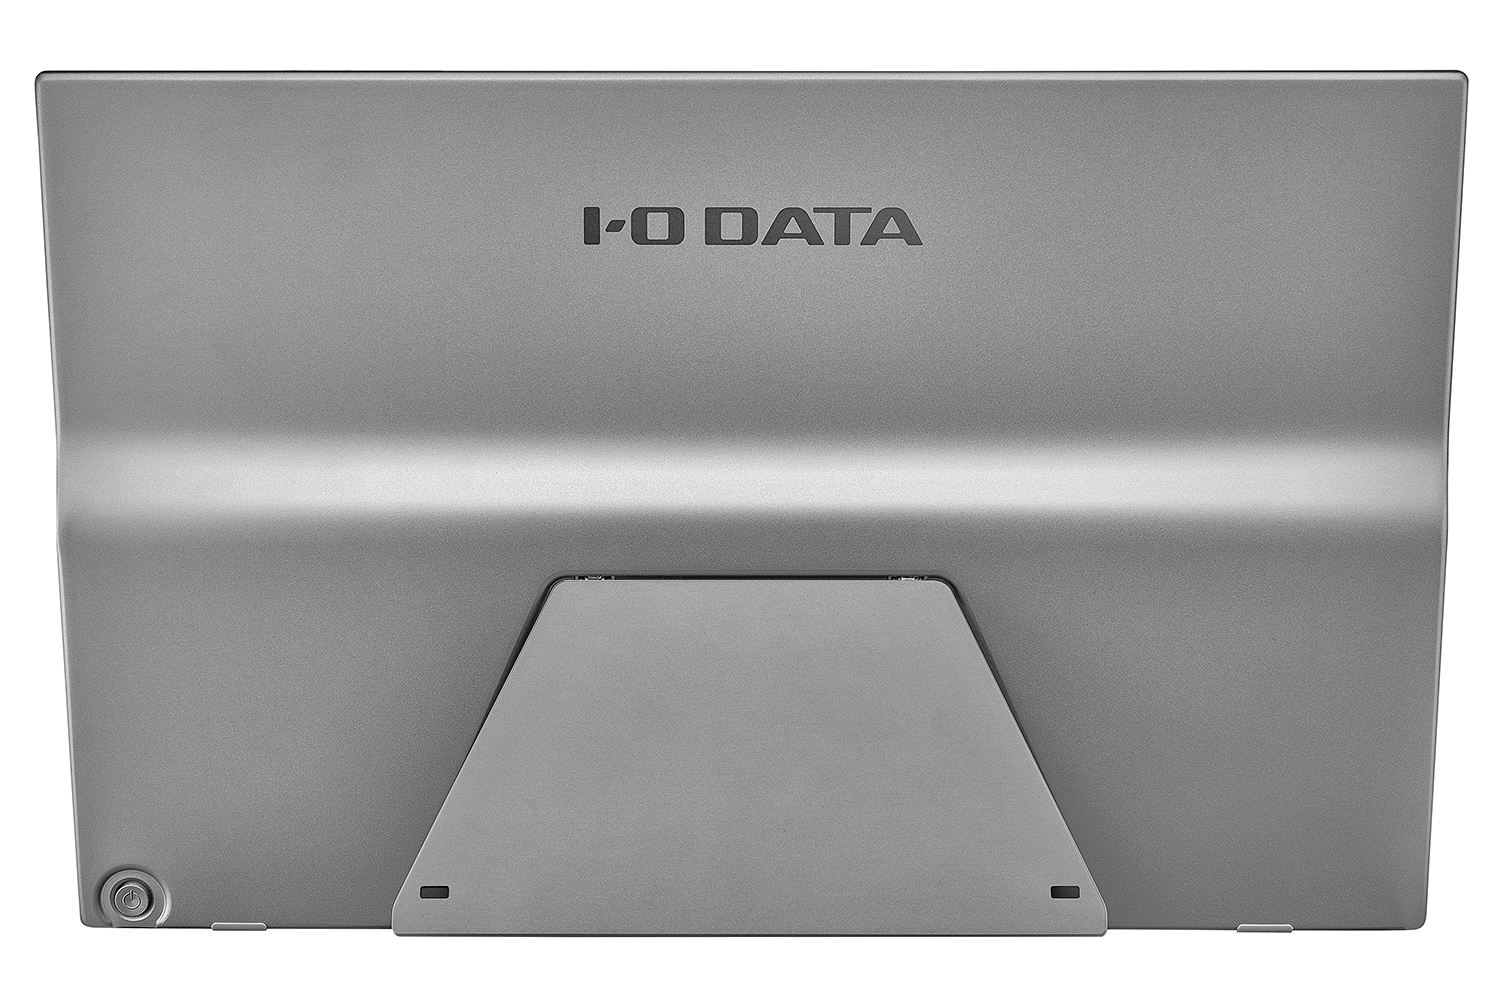 EX-LDC162ABM | 個人向けワイドモデル | IODATA アイ・オー・データ機器